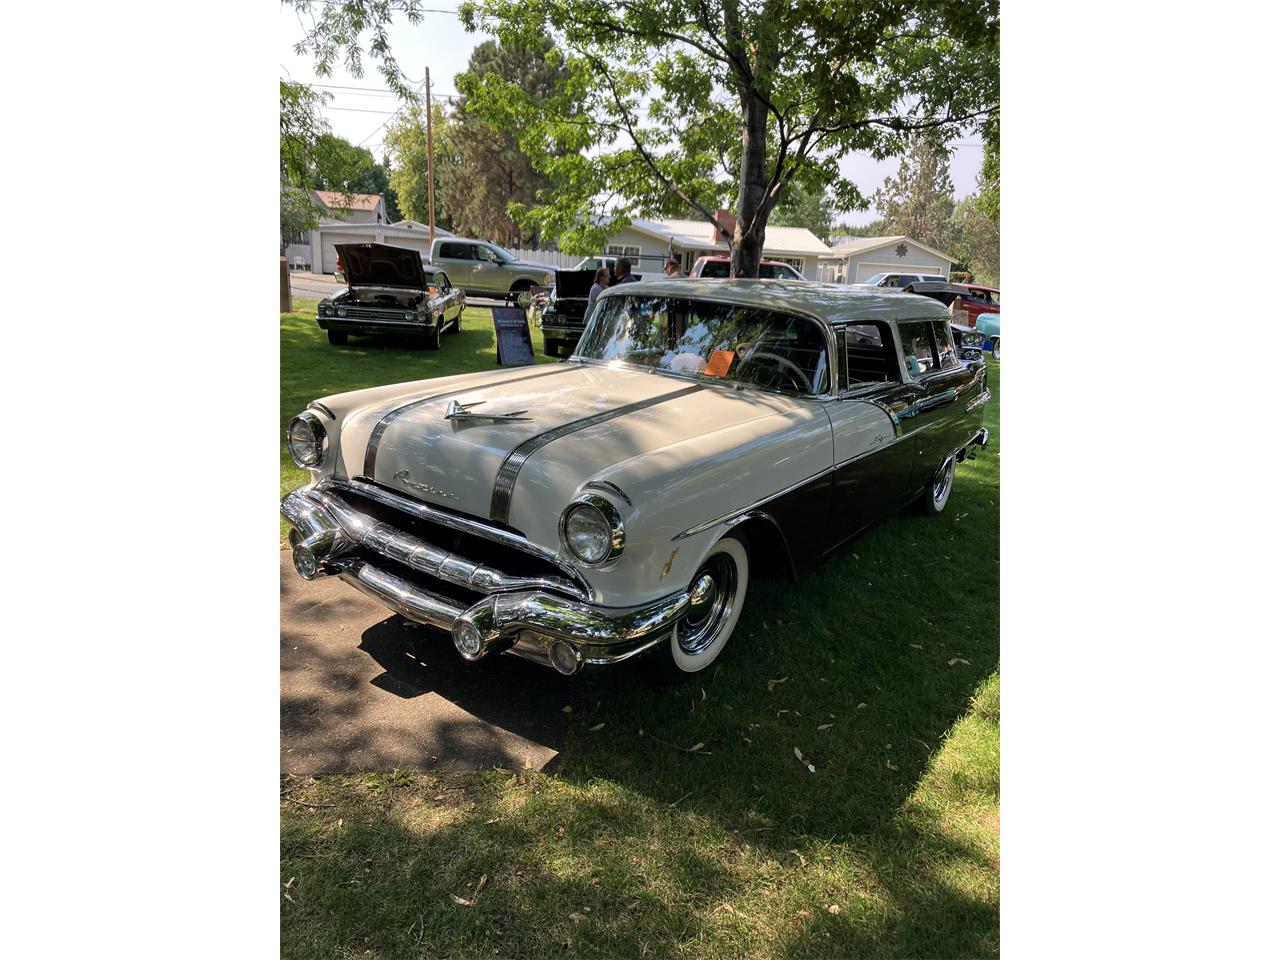 For Sale: 1956 Pontiac Safari in Baker City, Oregon for sale in Baker City, OR